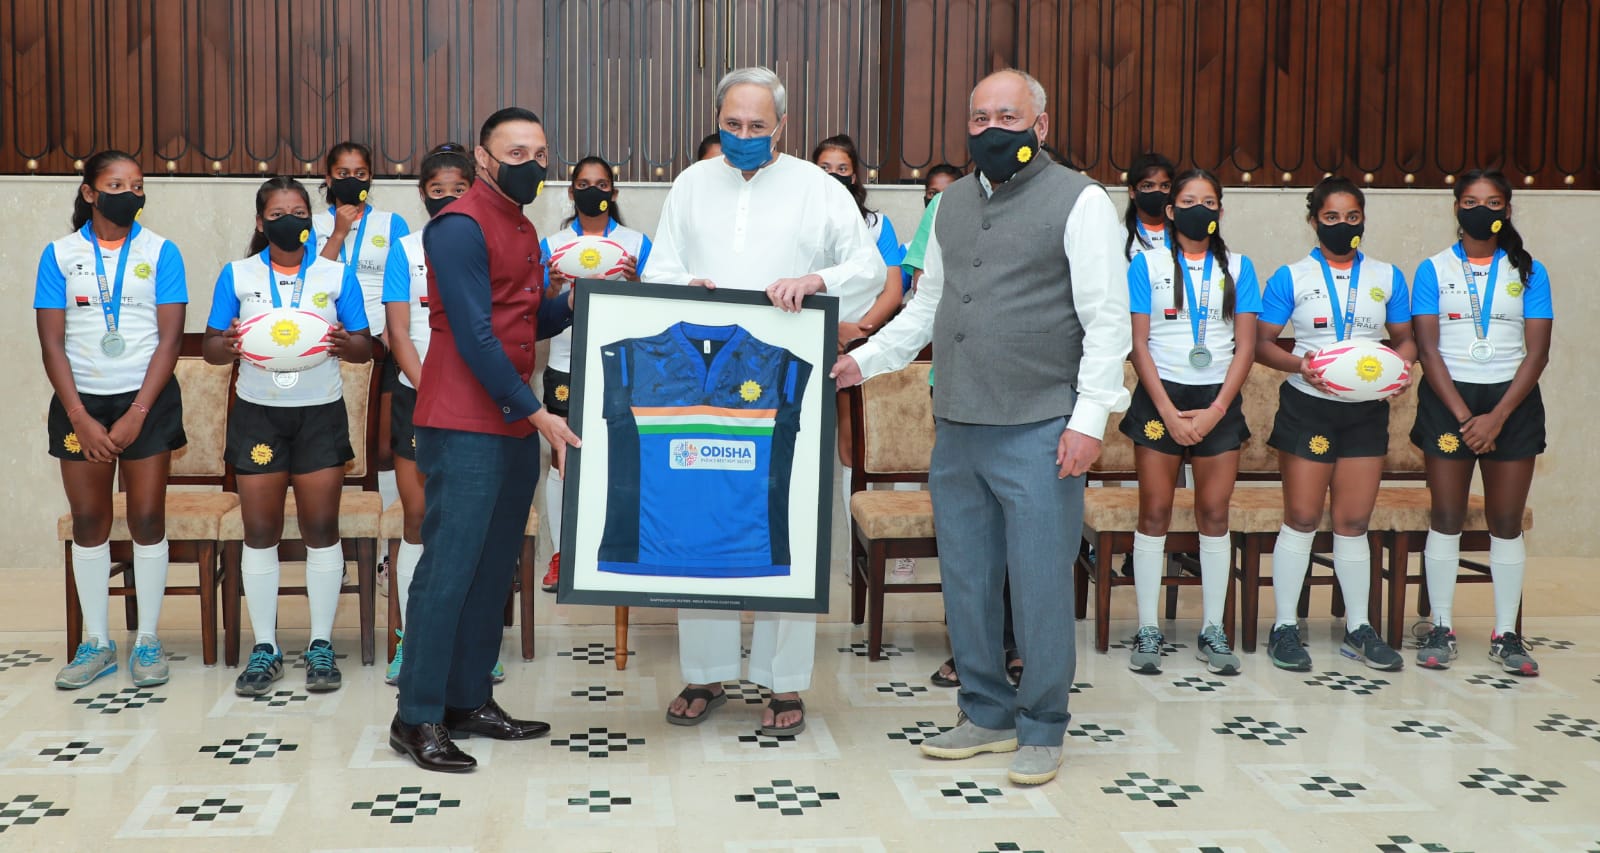 Odisha CM Presents Cash Award Of Rs 5 Lakh To Indian U-18 Girls Rugby Team